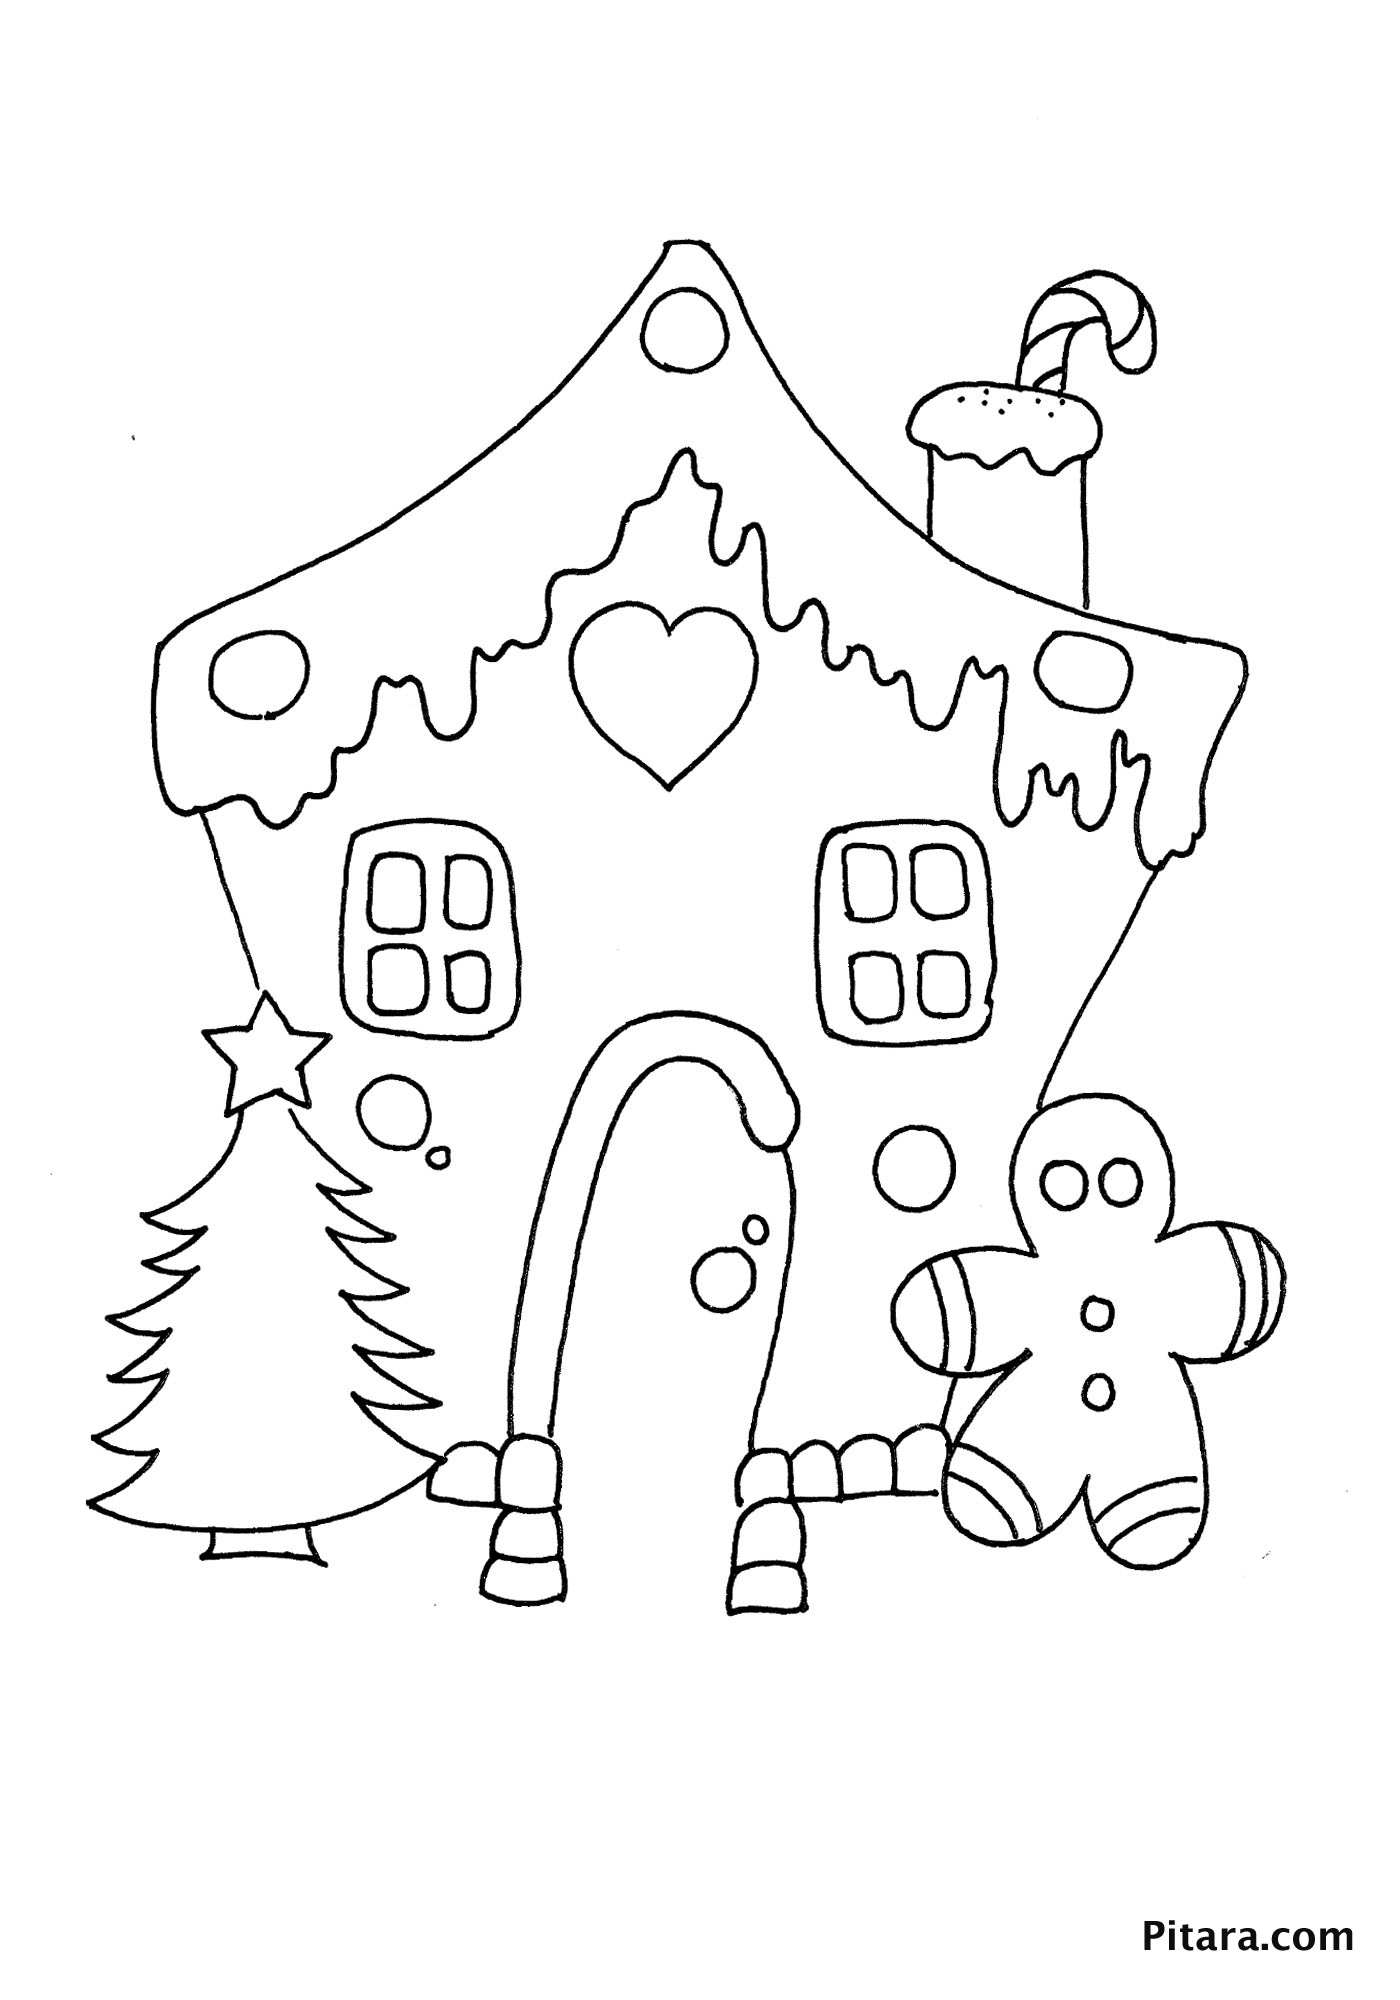 Christmas decorations – Coloring page – Pitara Kids Network